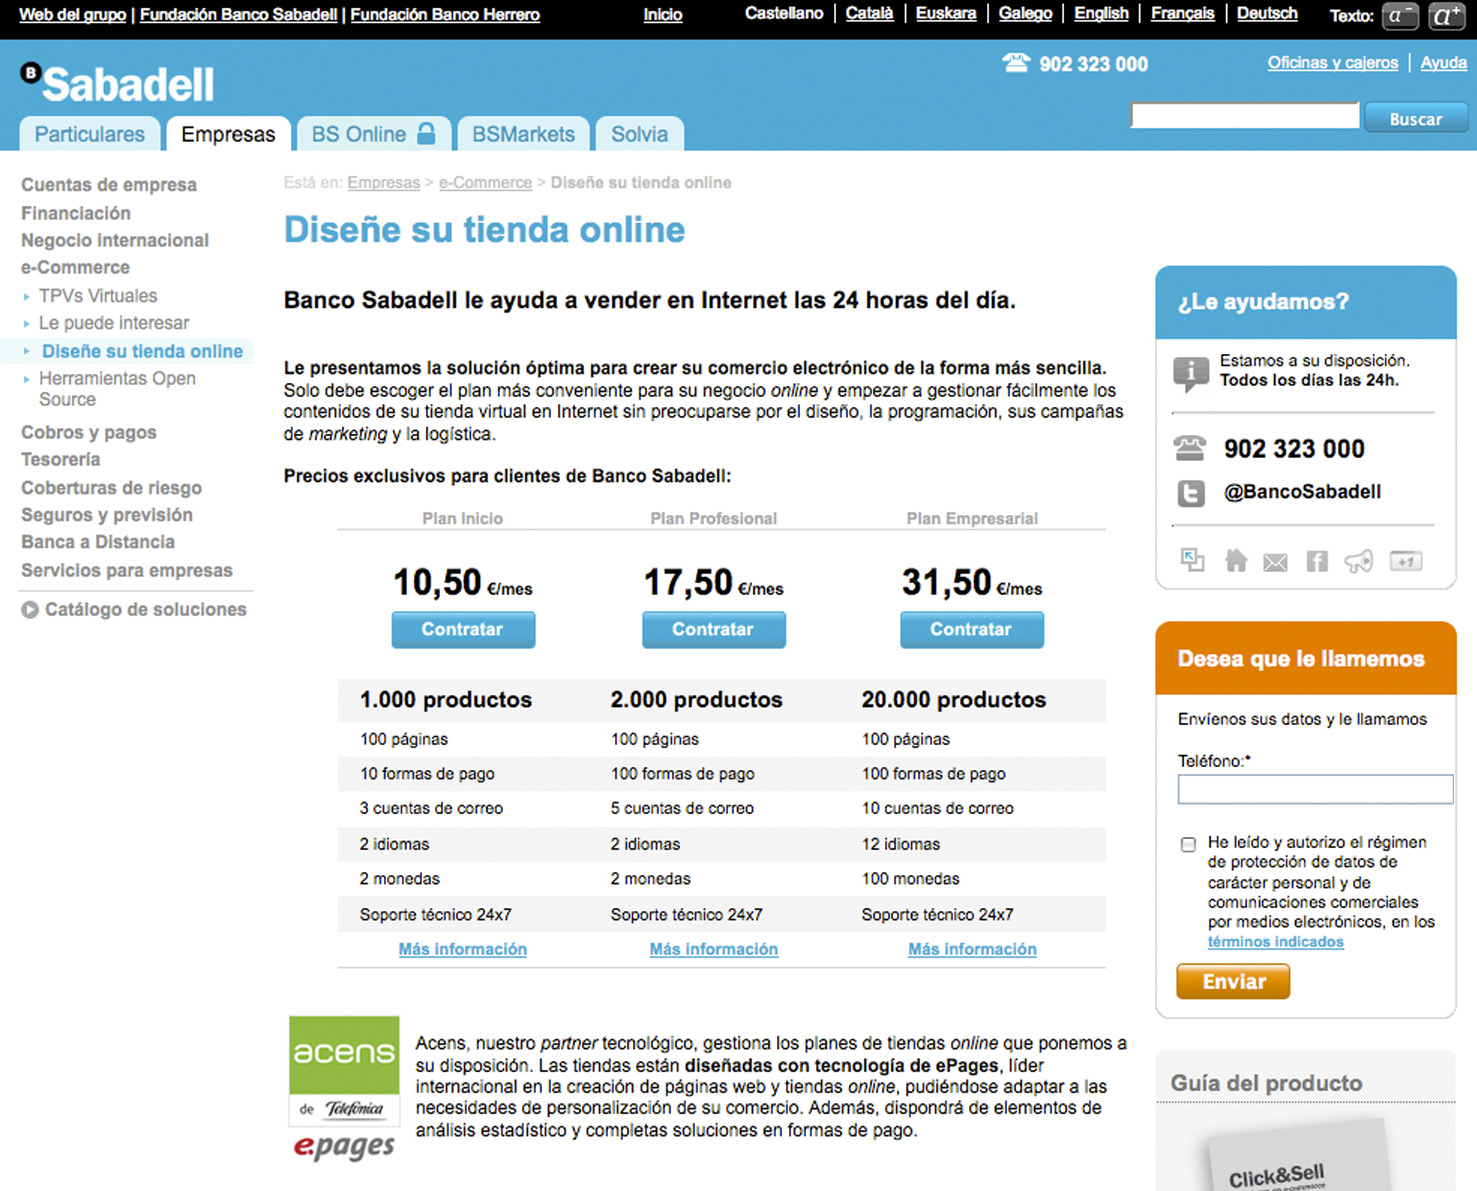 banco-sabadell-tiendas-online-blog-acens-cloud